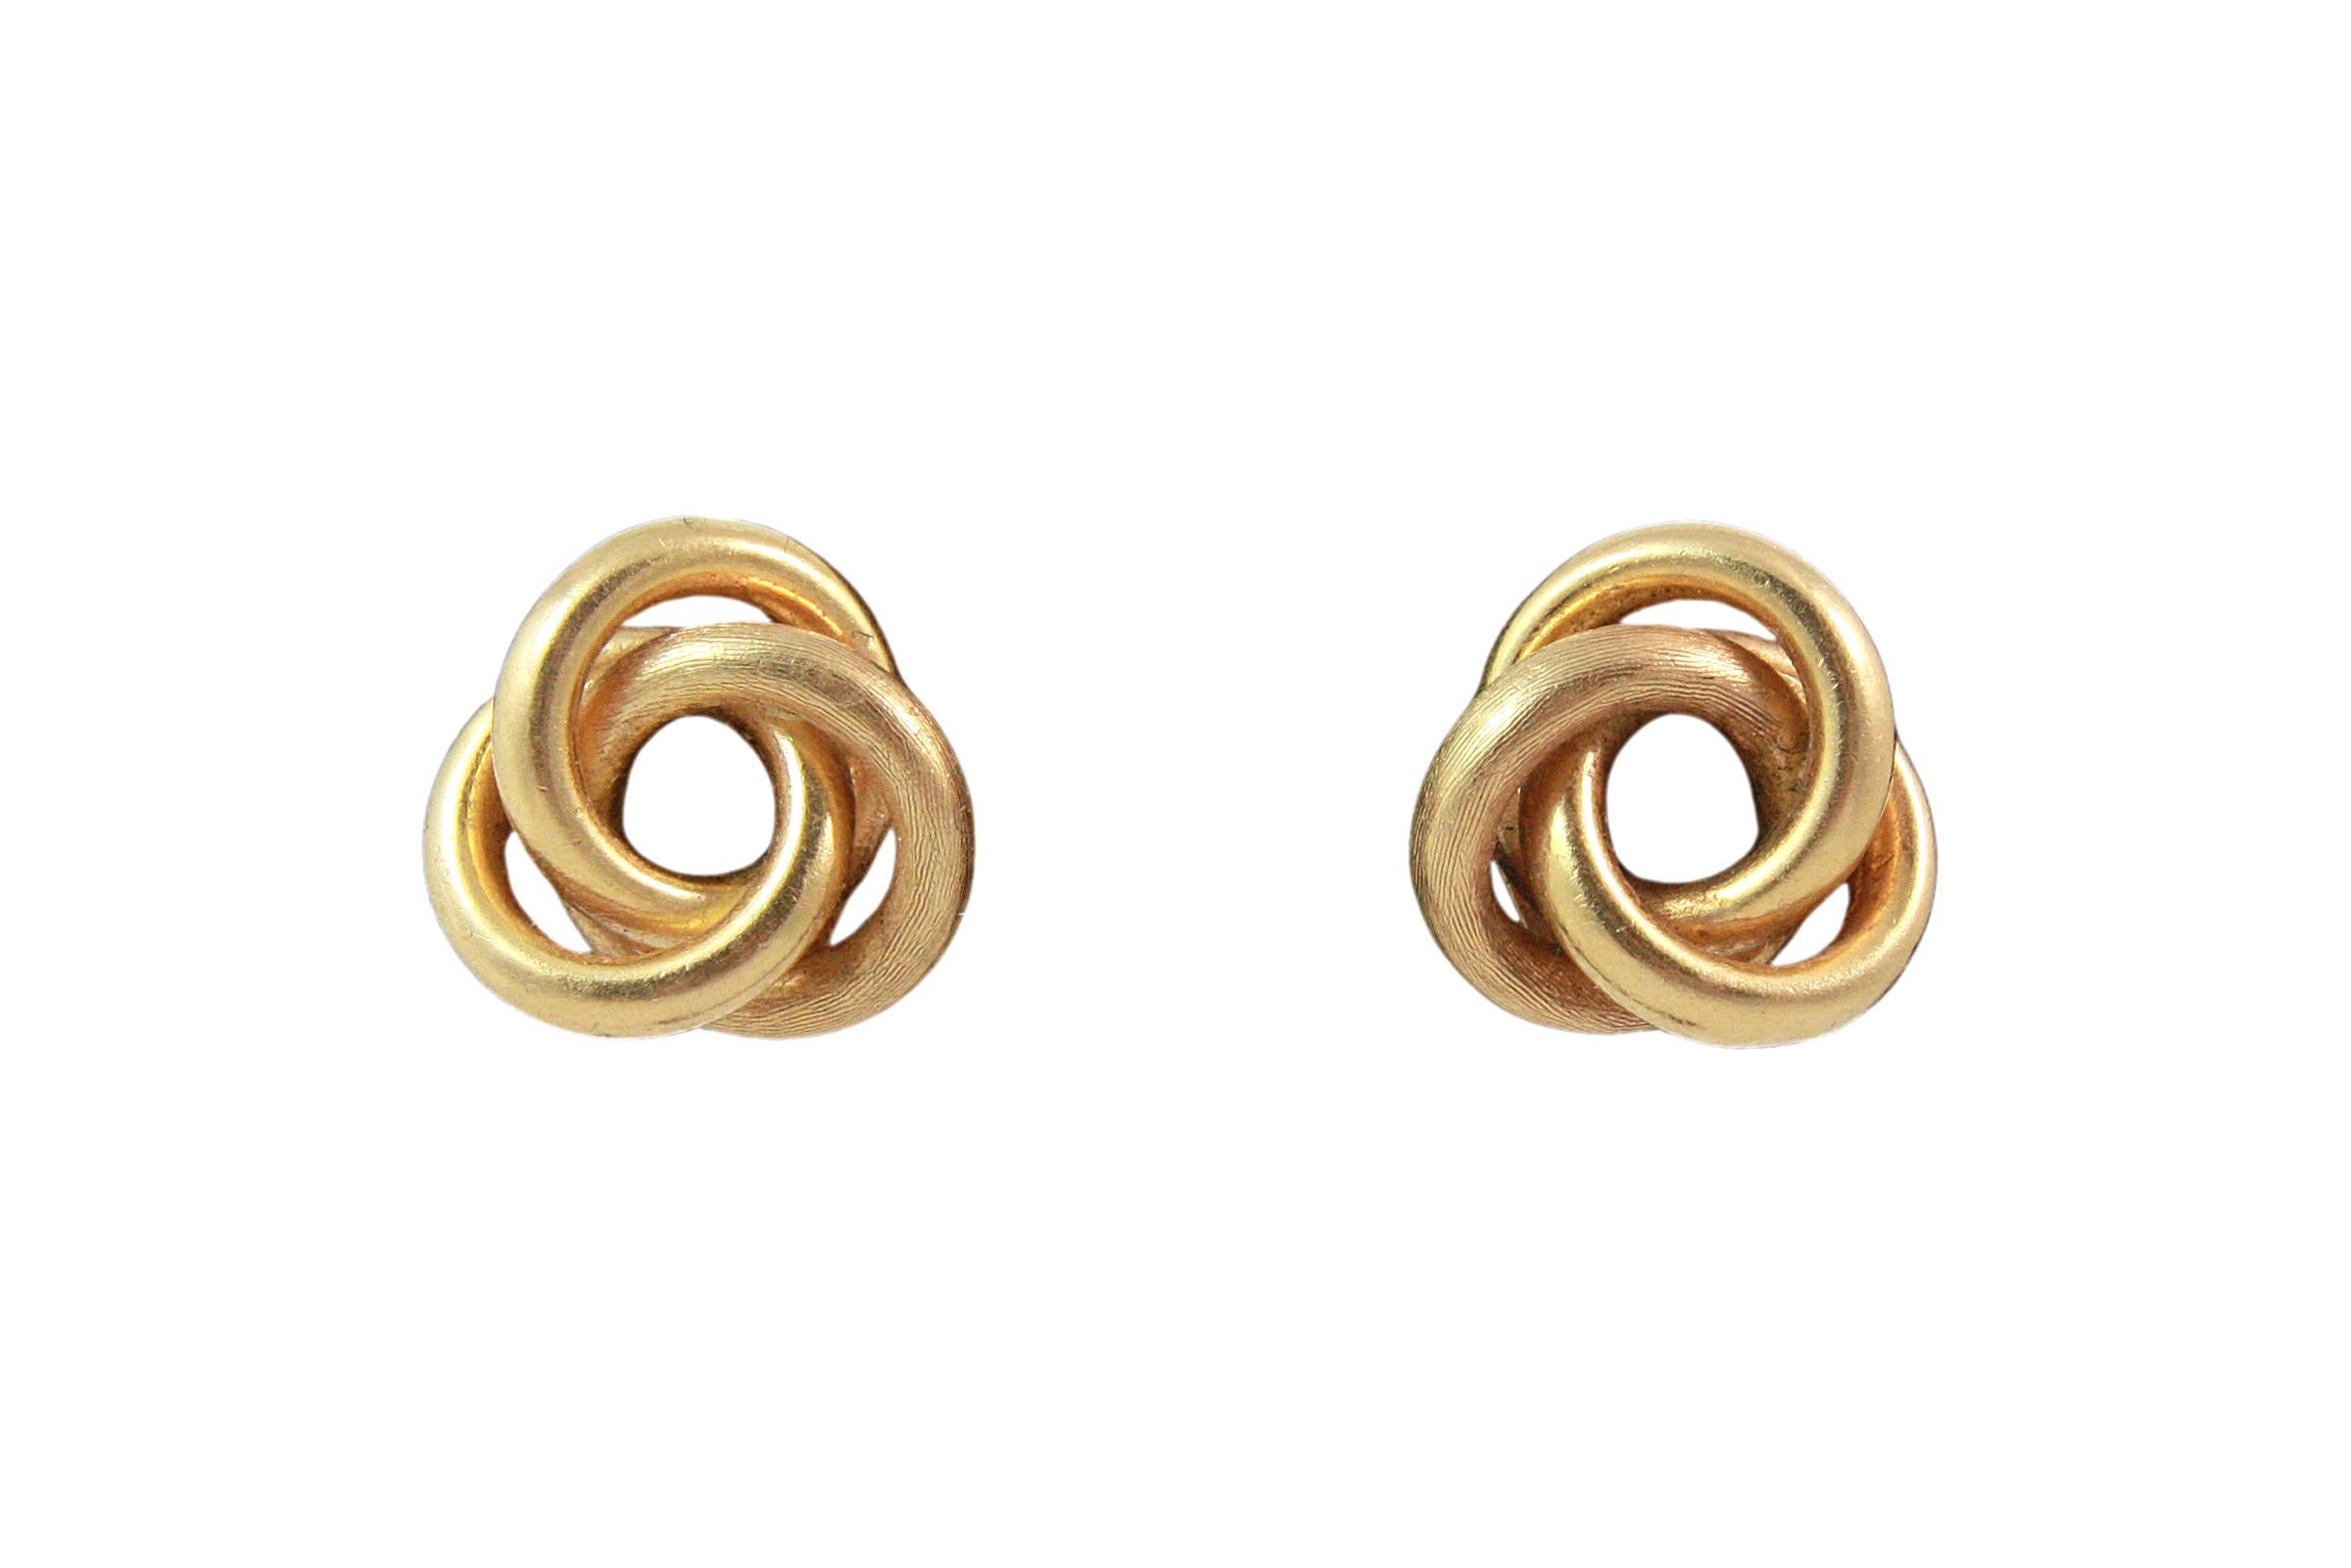 18K Gold Italienisch KNOT Ohrringe
14K Gold Ohrring Backings
Italienisch
Unbekannter Designer